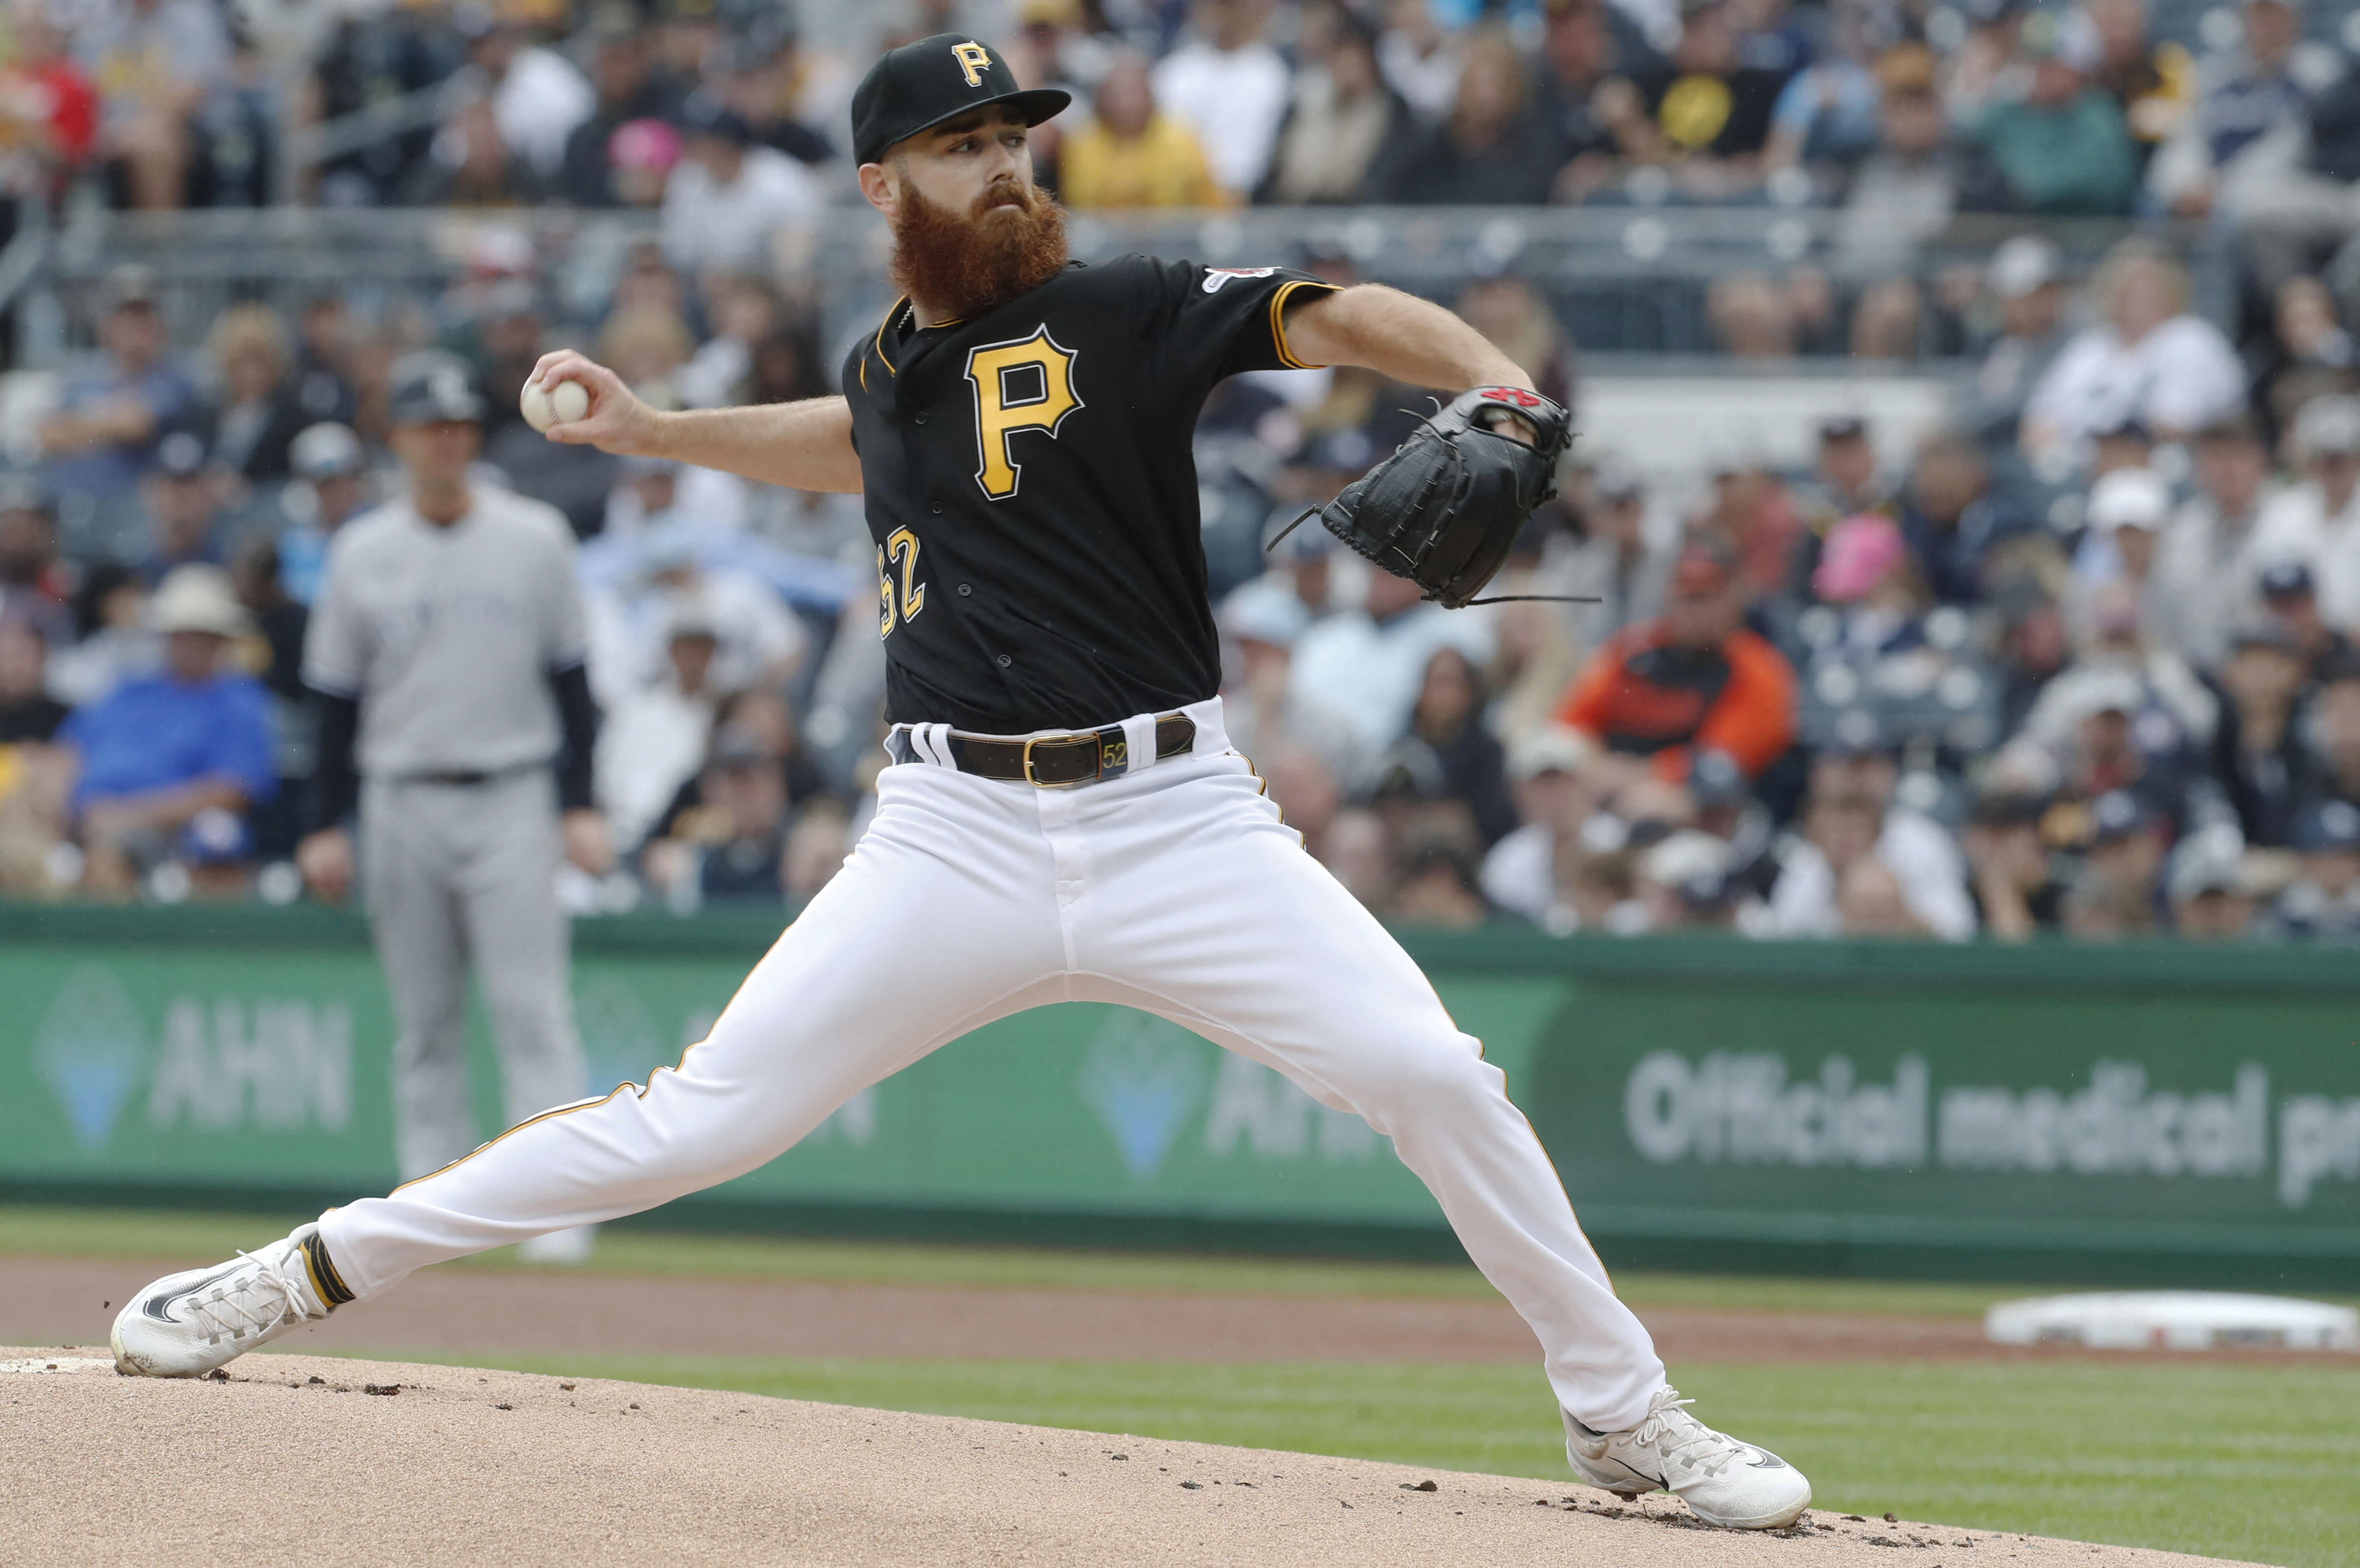 Pirates push past Yankees to avoid sweep